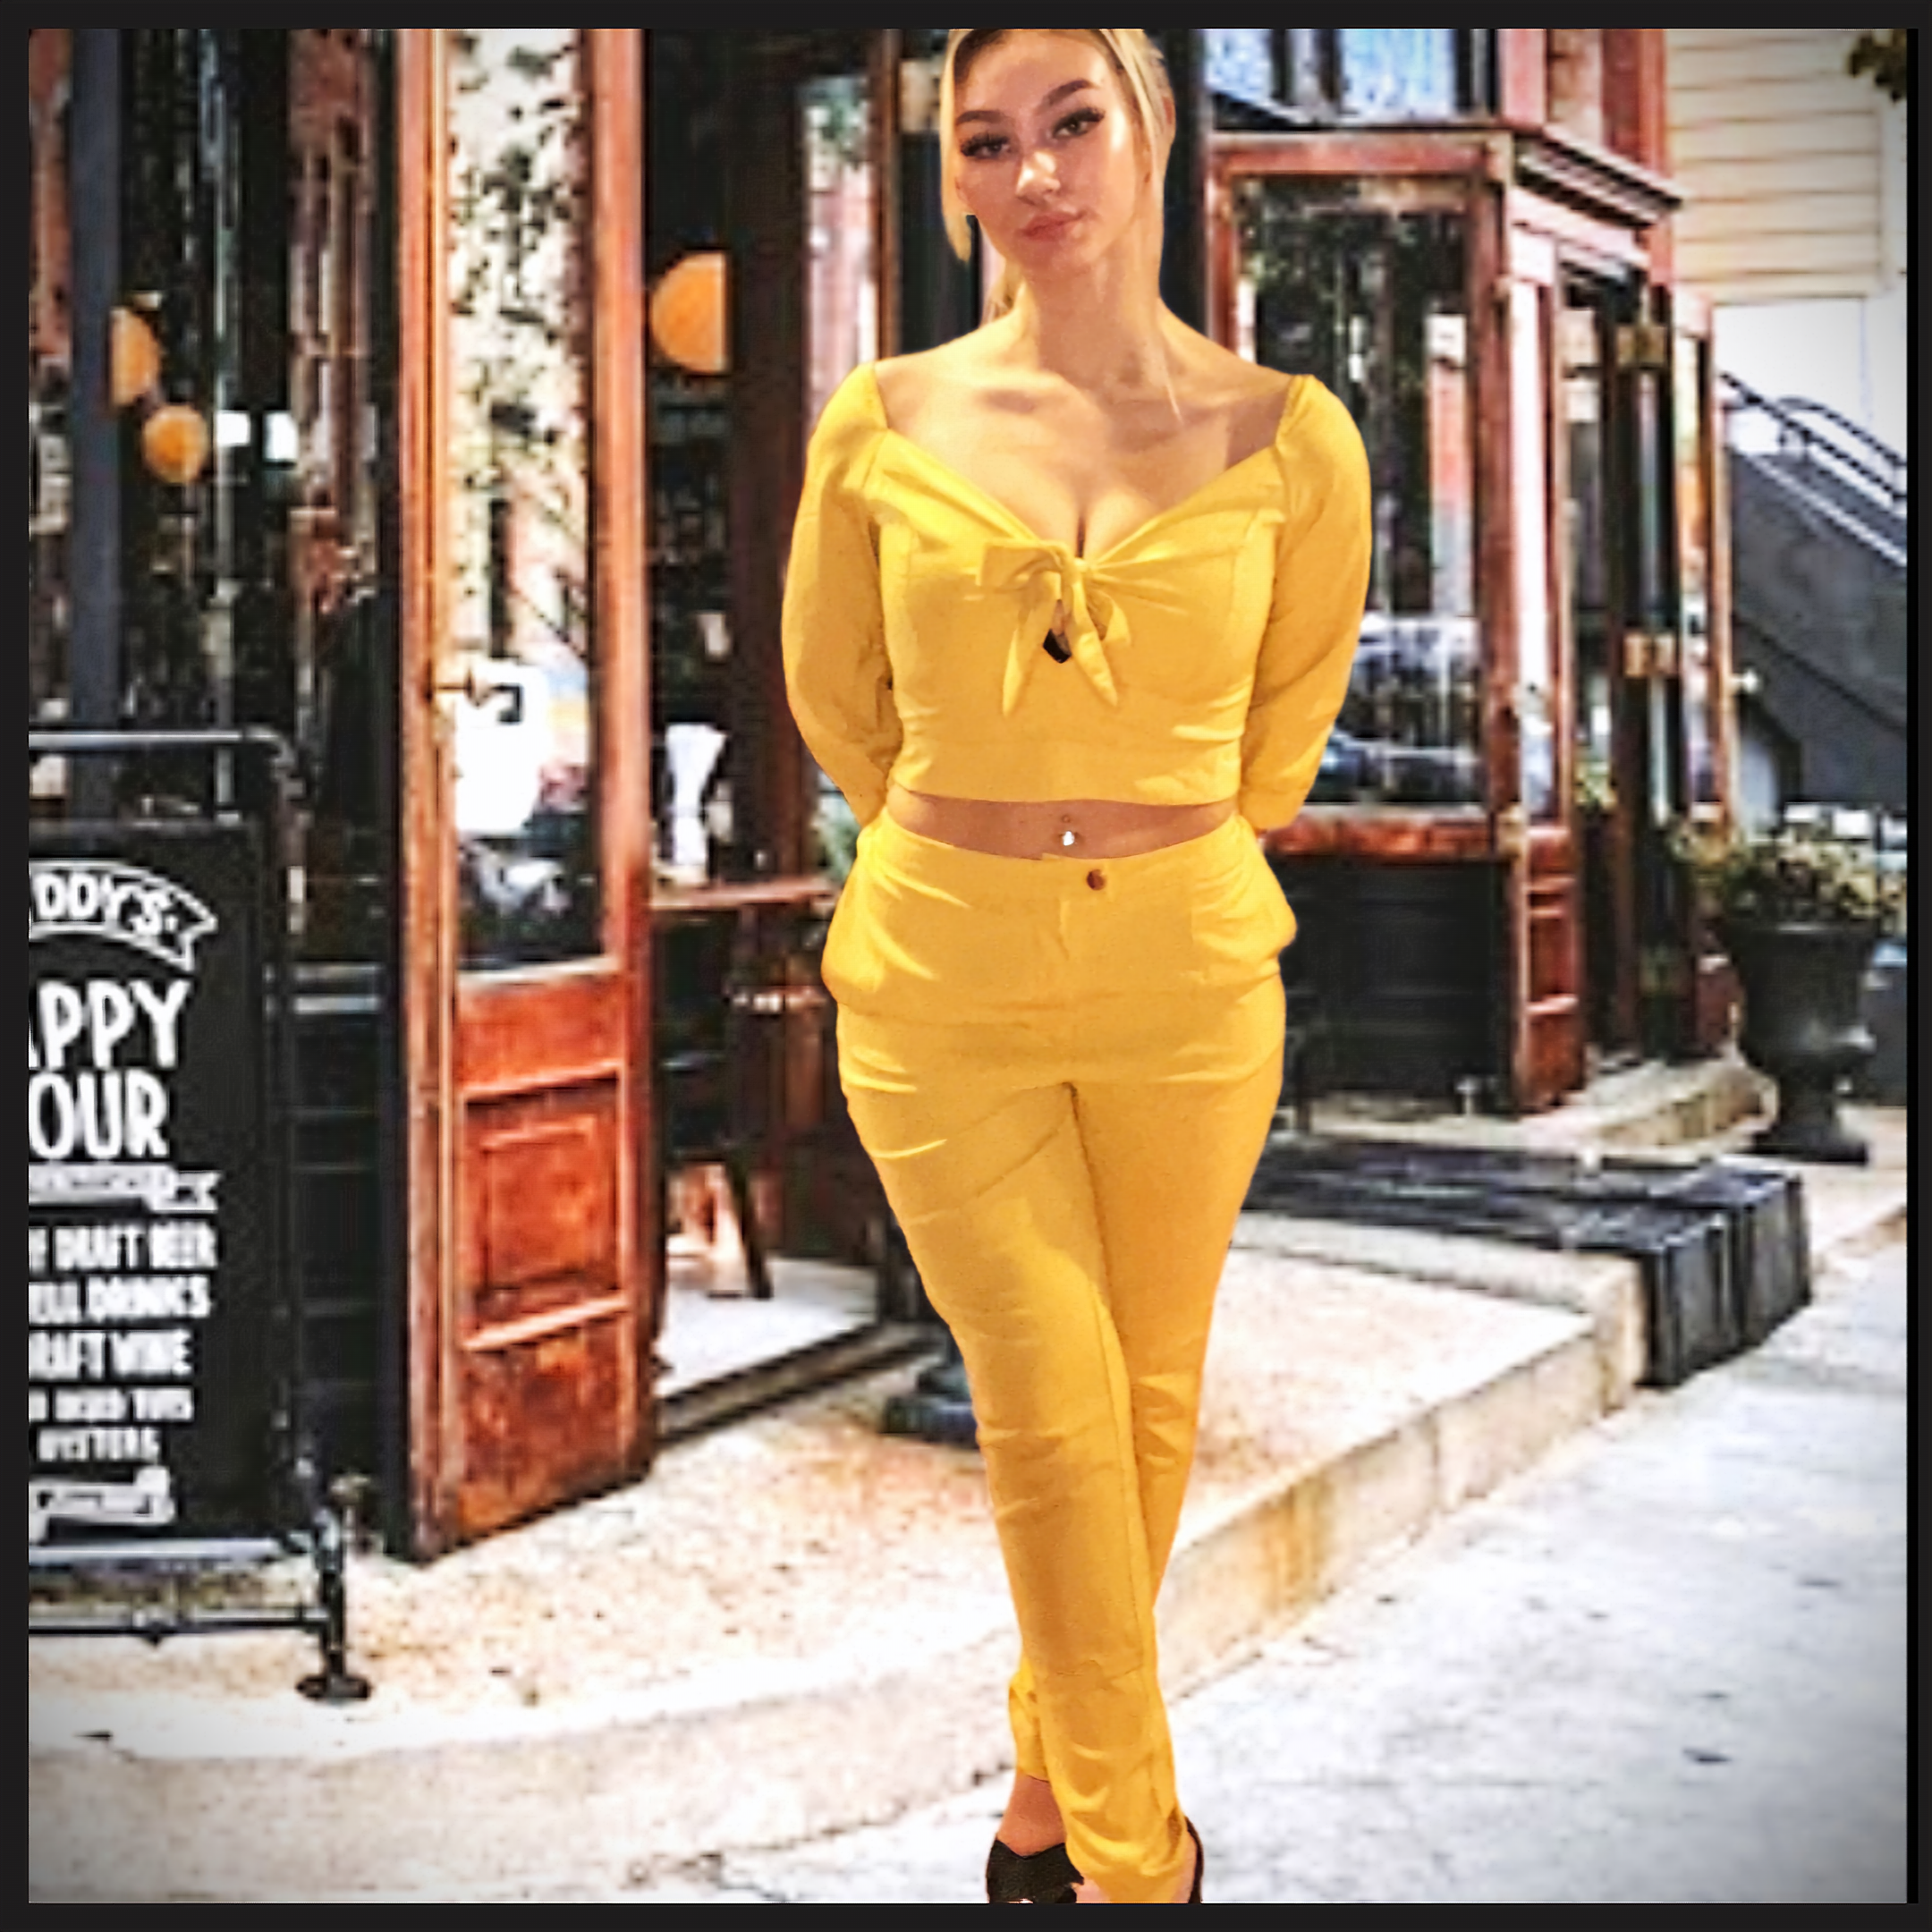 Buy TINTED Lemon Yellow Regular Loose Pants online